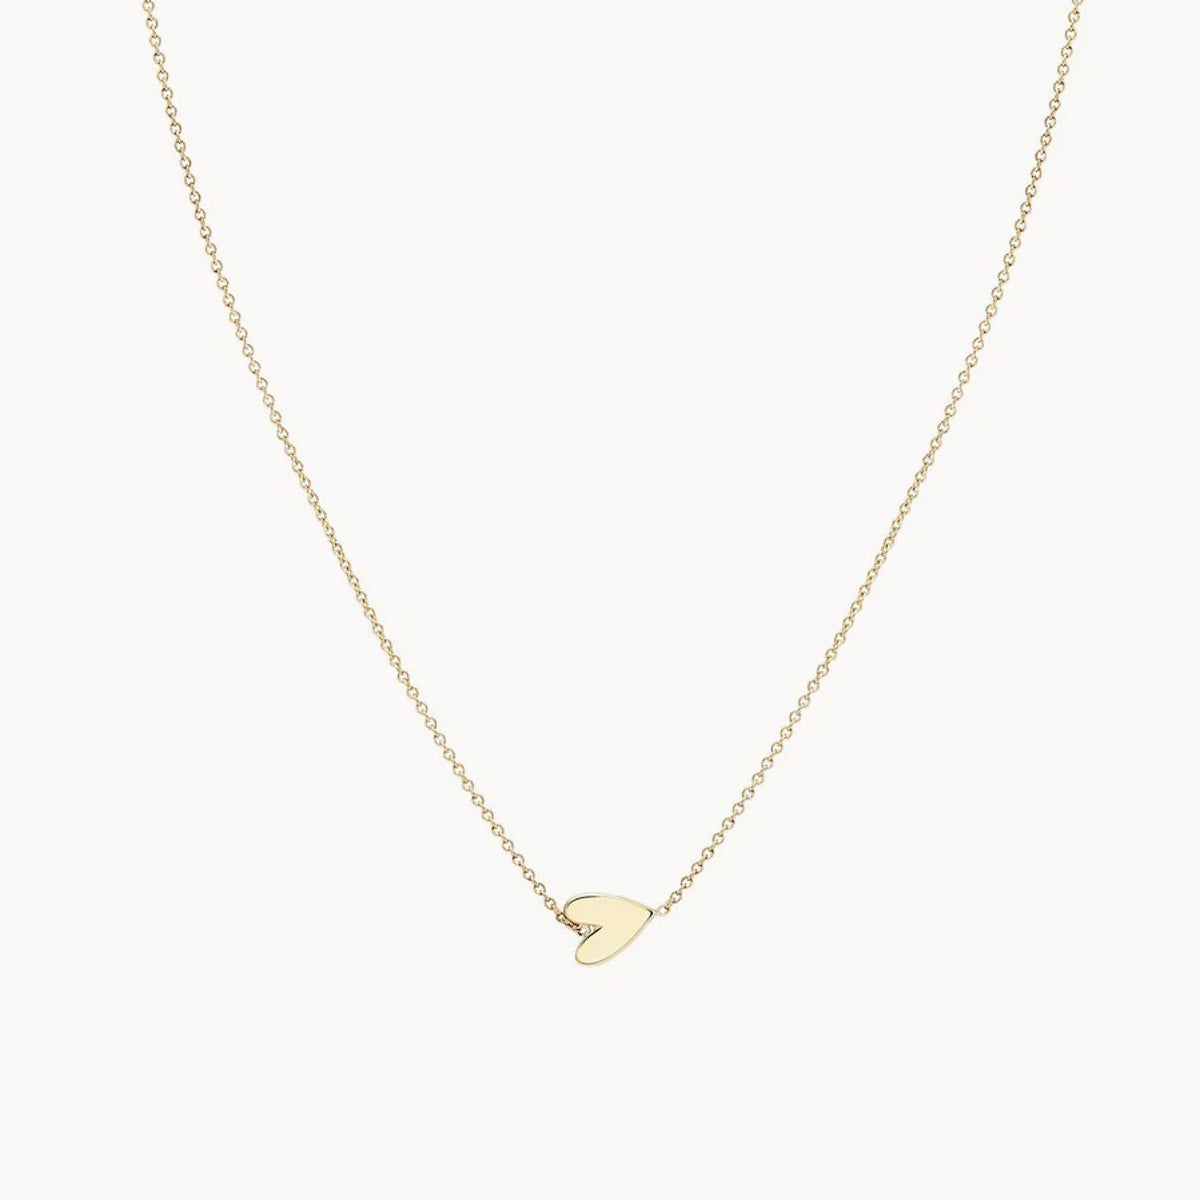 Everyday Little Lovely Heart Necklace, 14k